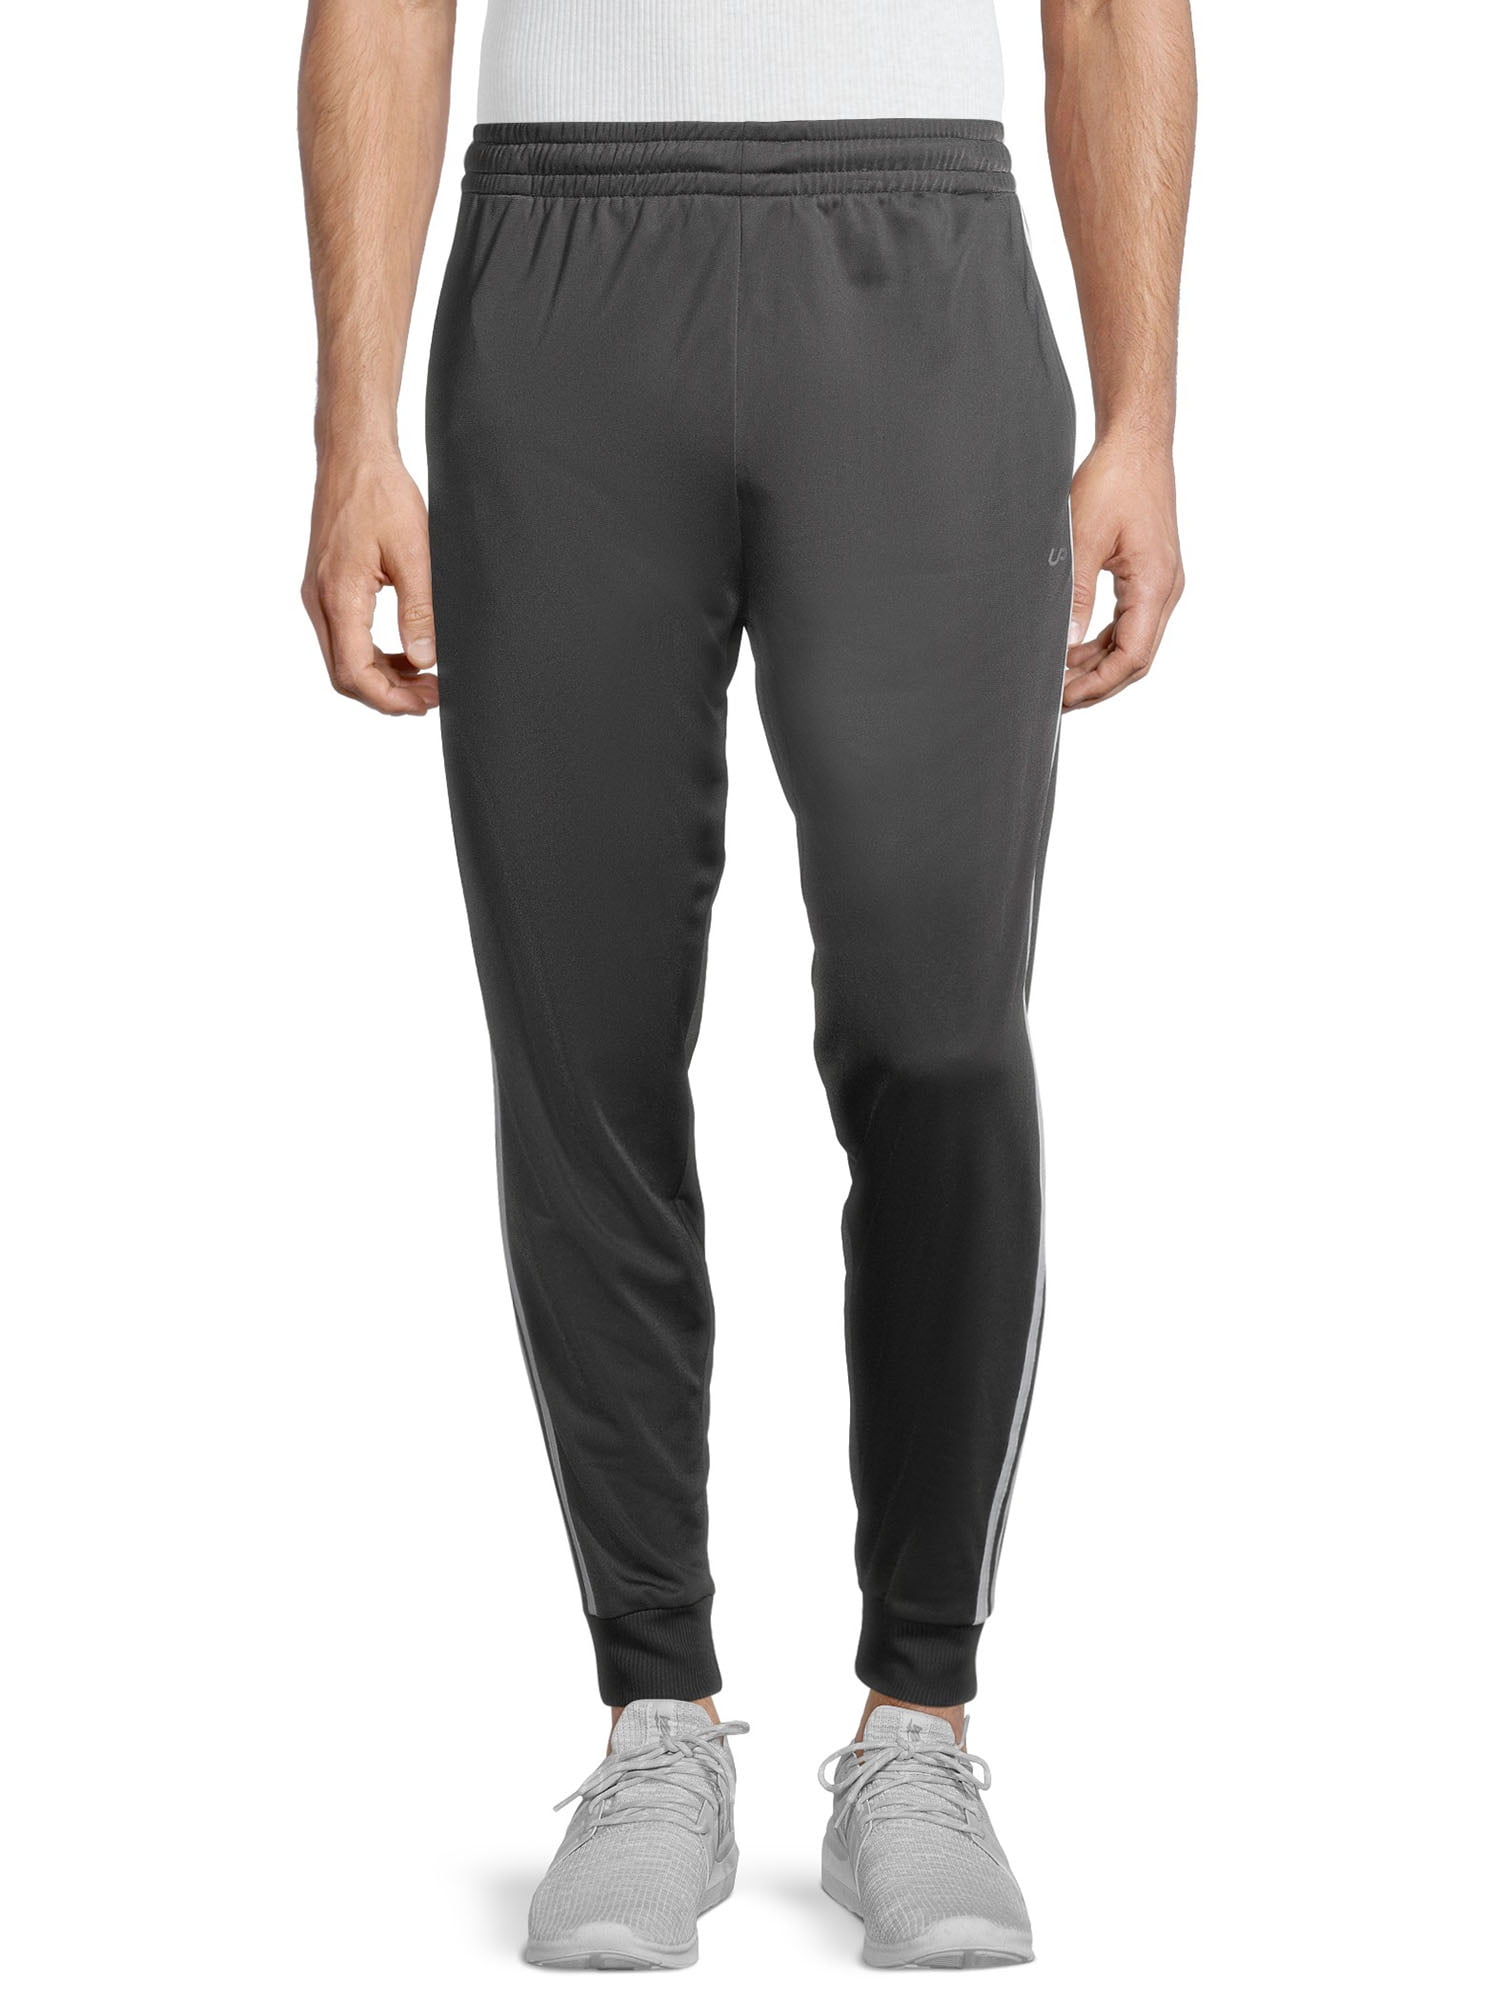 Unipro Men's Tricot Pants with Double Side Stripes - Walmart.com